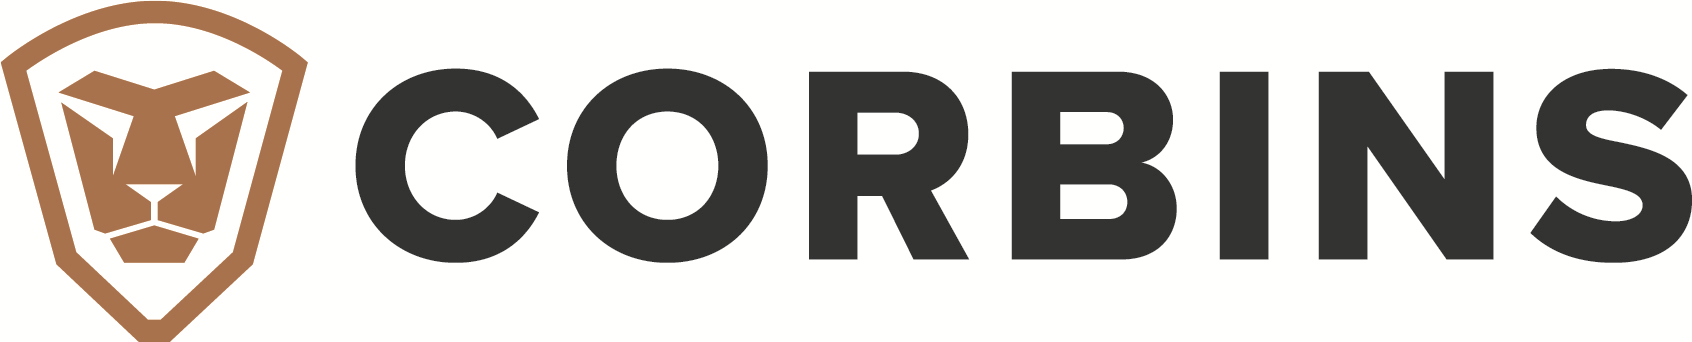 Corbins logo